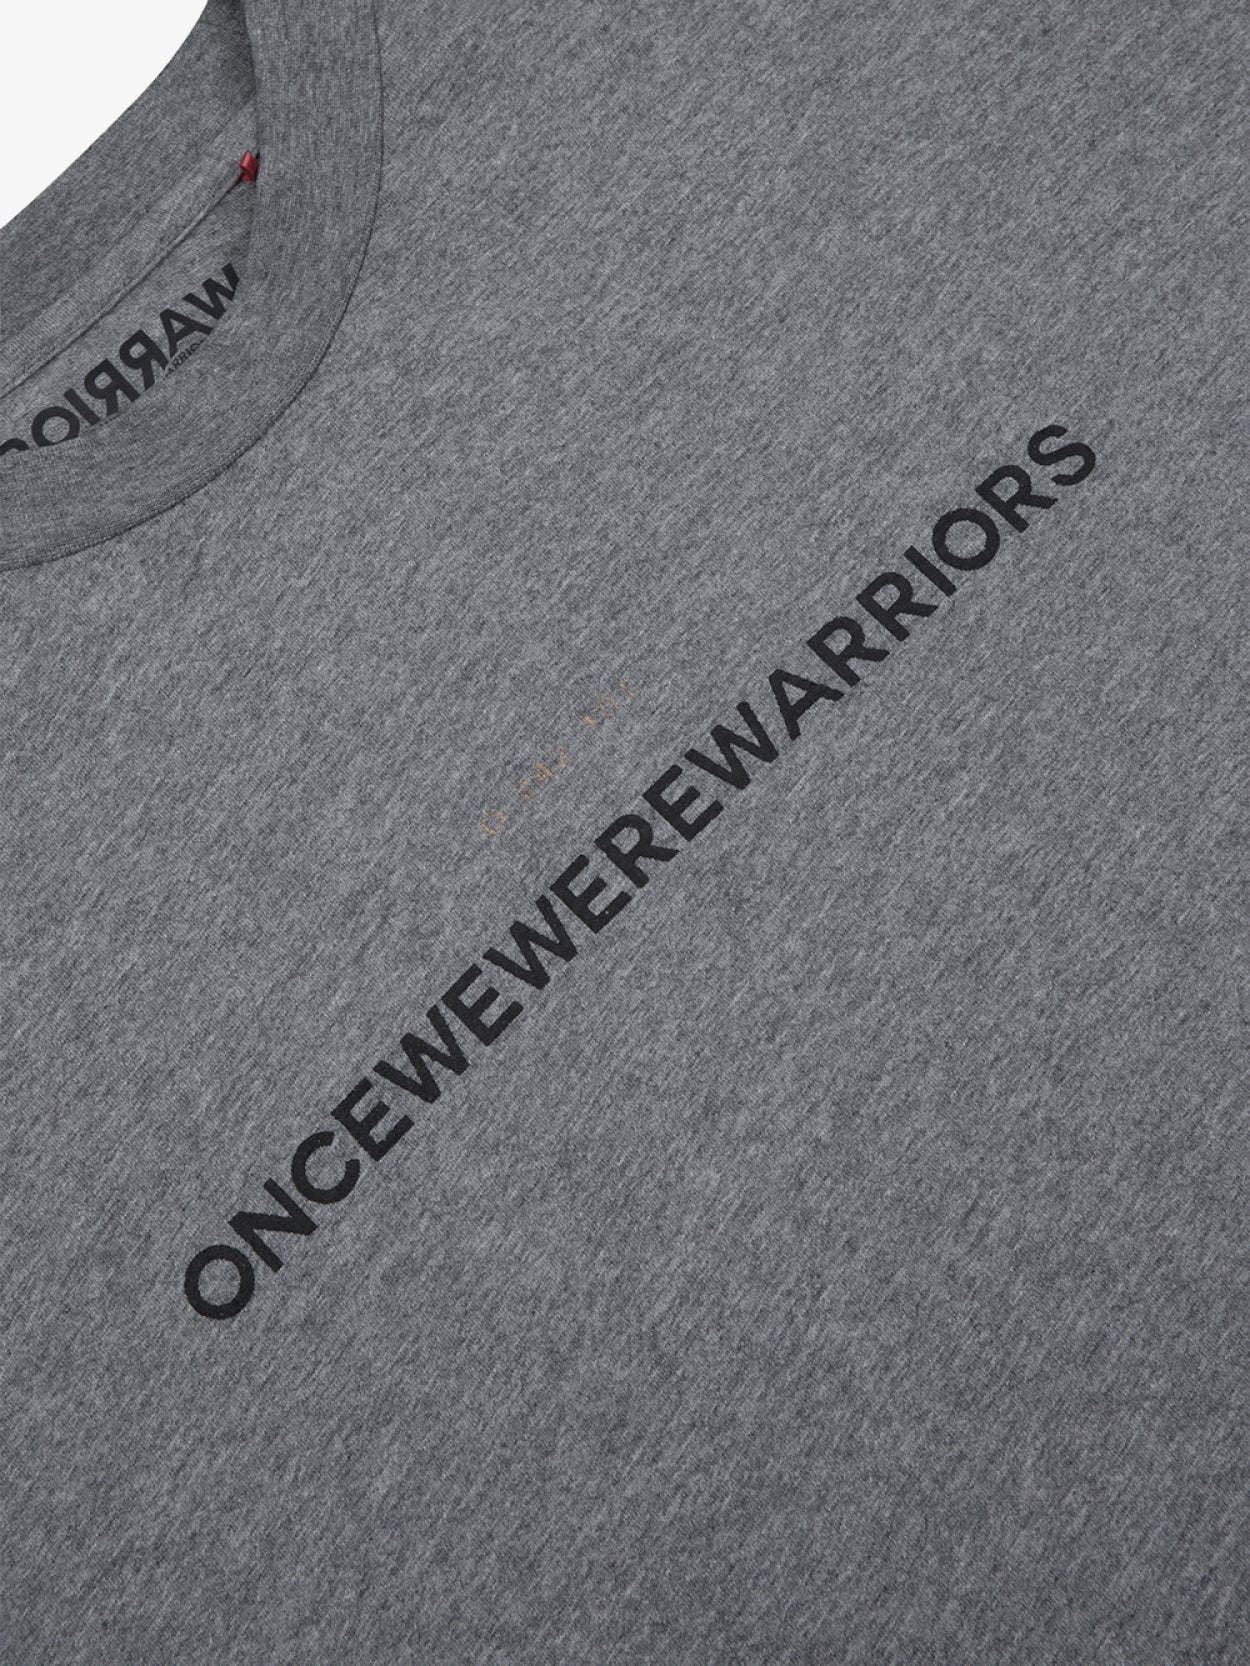 Ota Logo Tee | dark grey melange - Once We Were Warriors